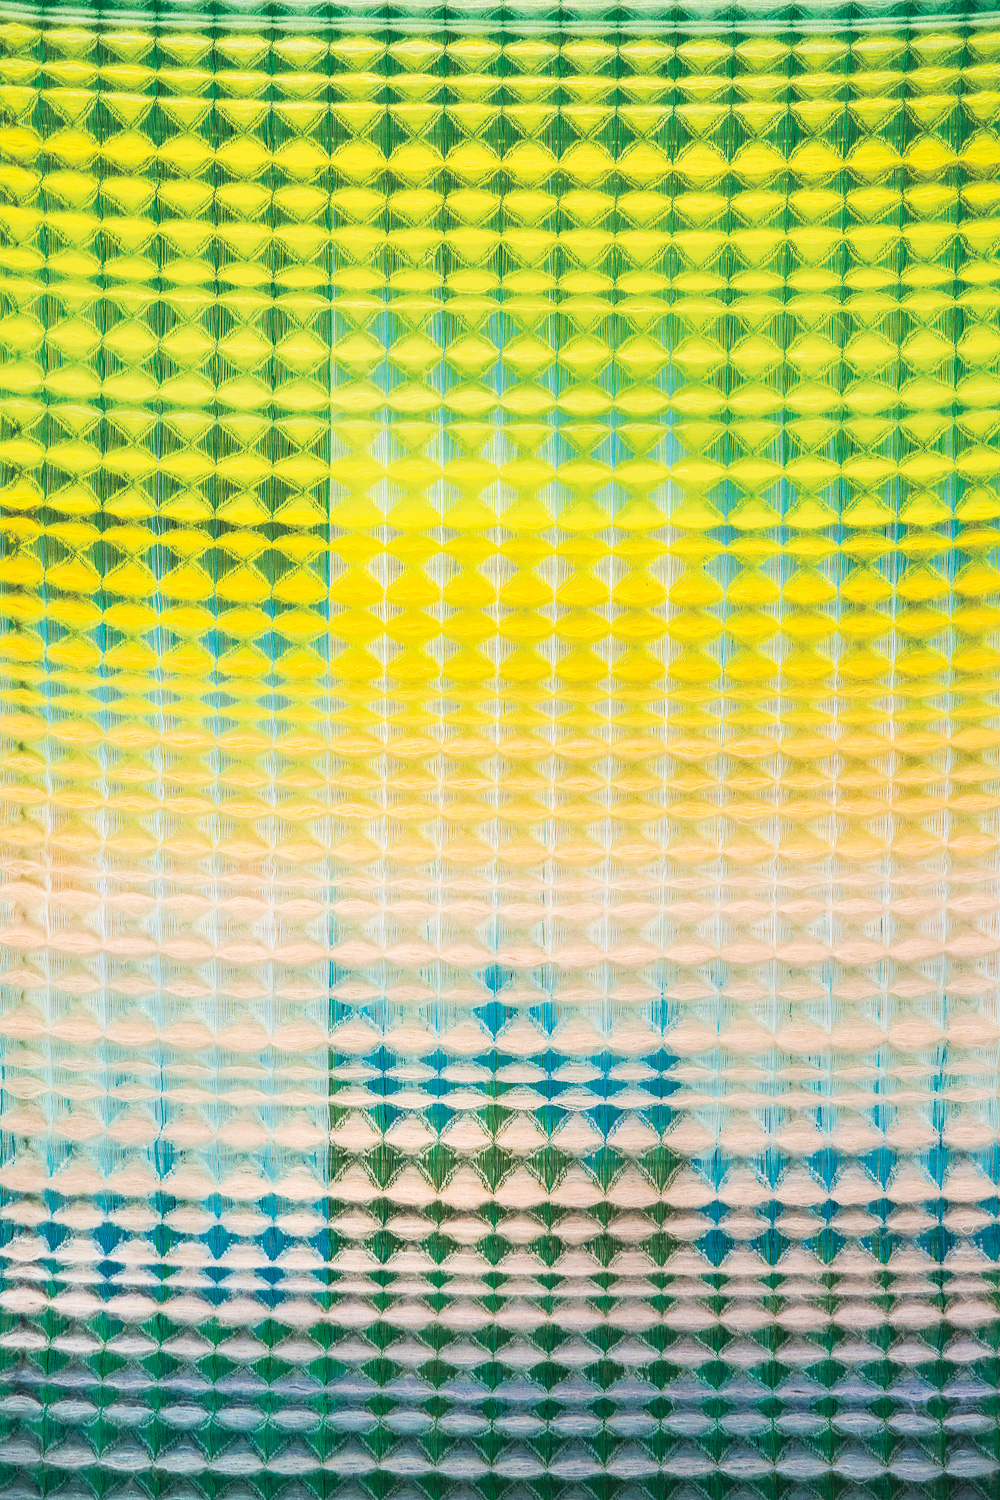 textile weaving in an ombre color palette